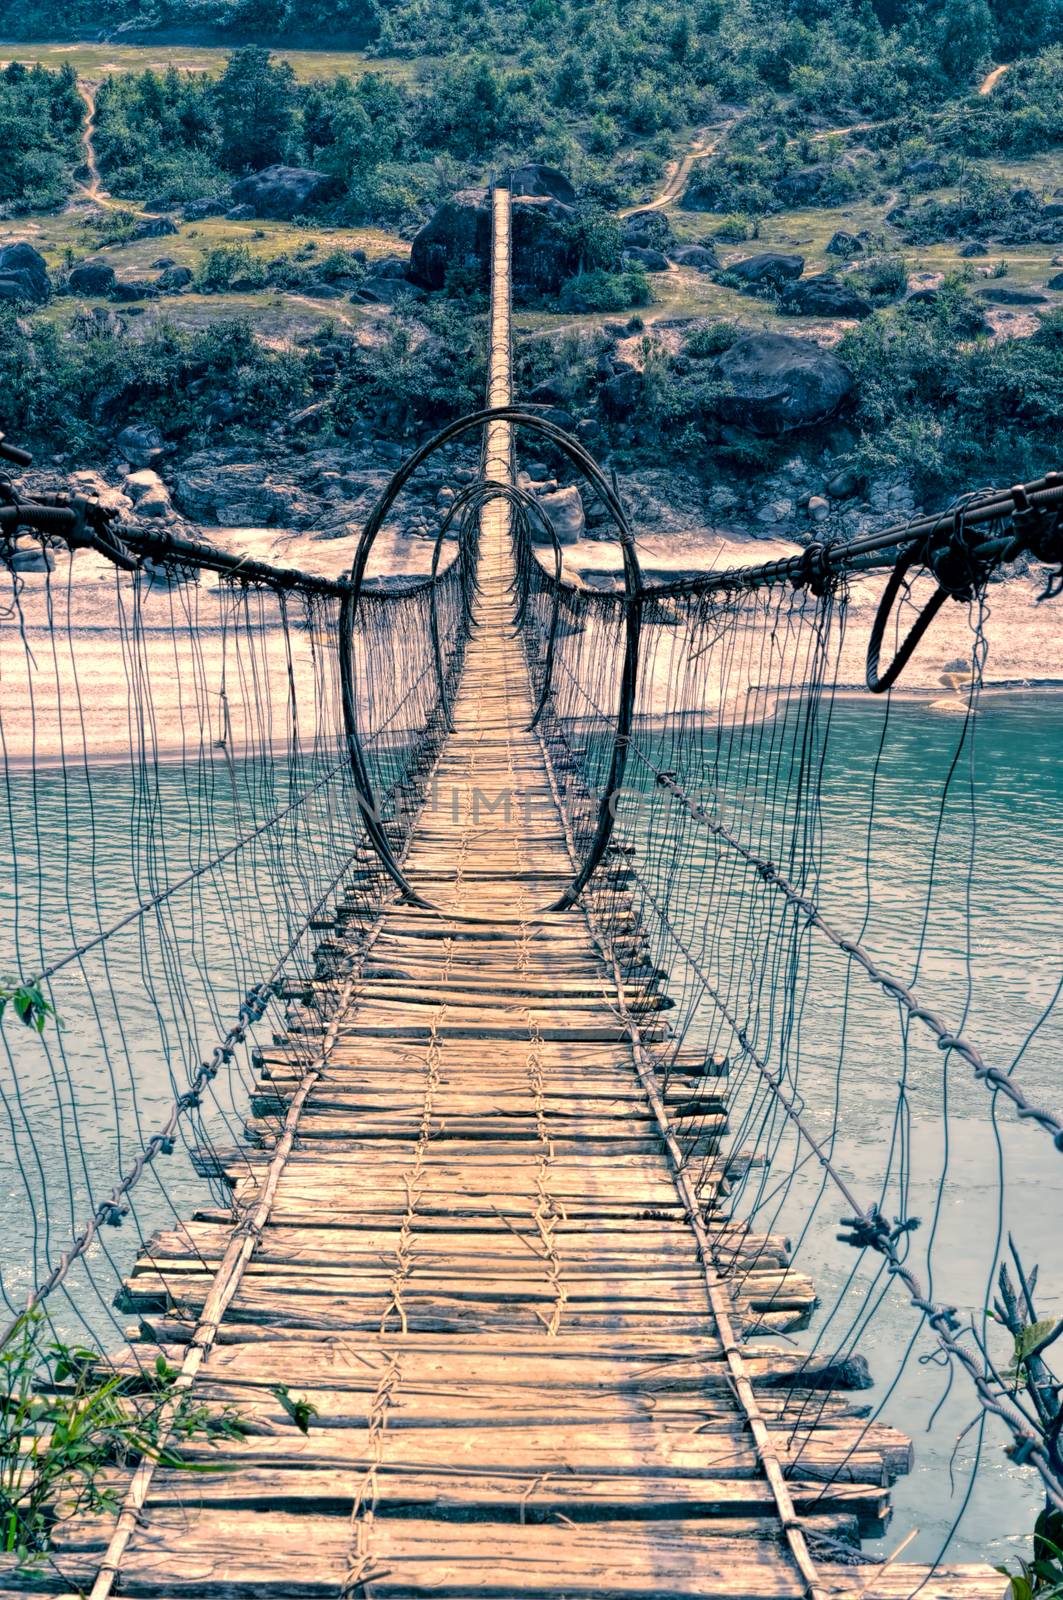 Scary shaky long footgbridge in Arunachal Pradesh region in India